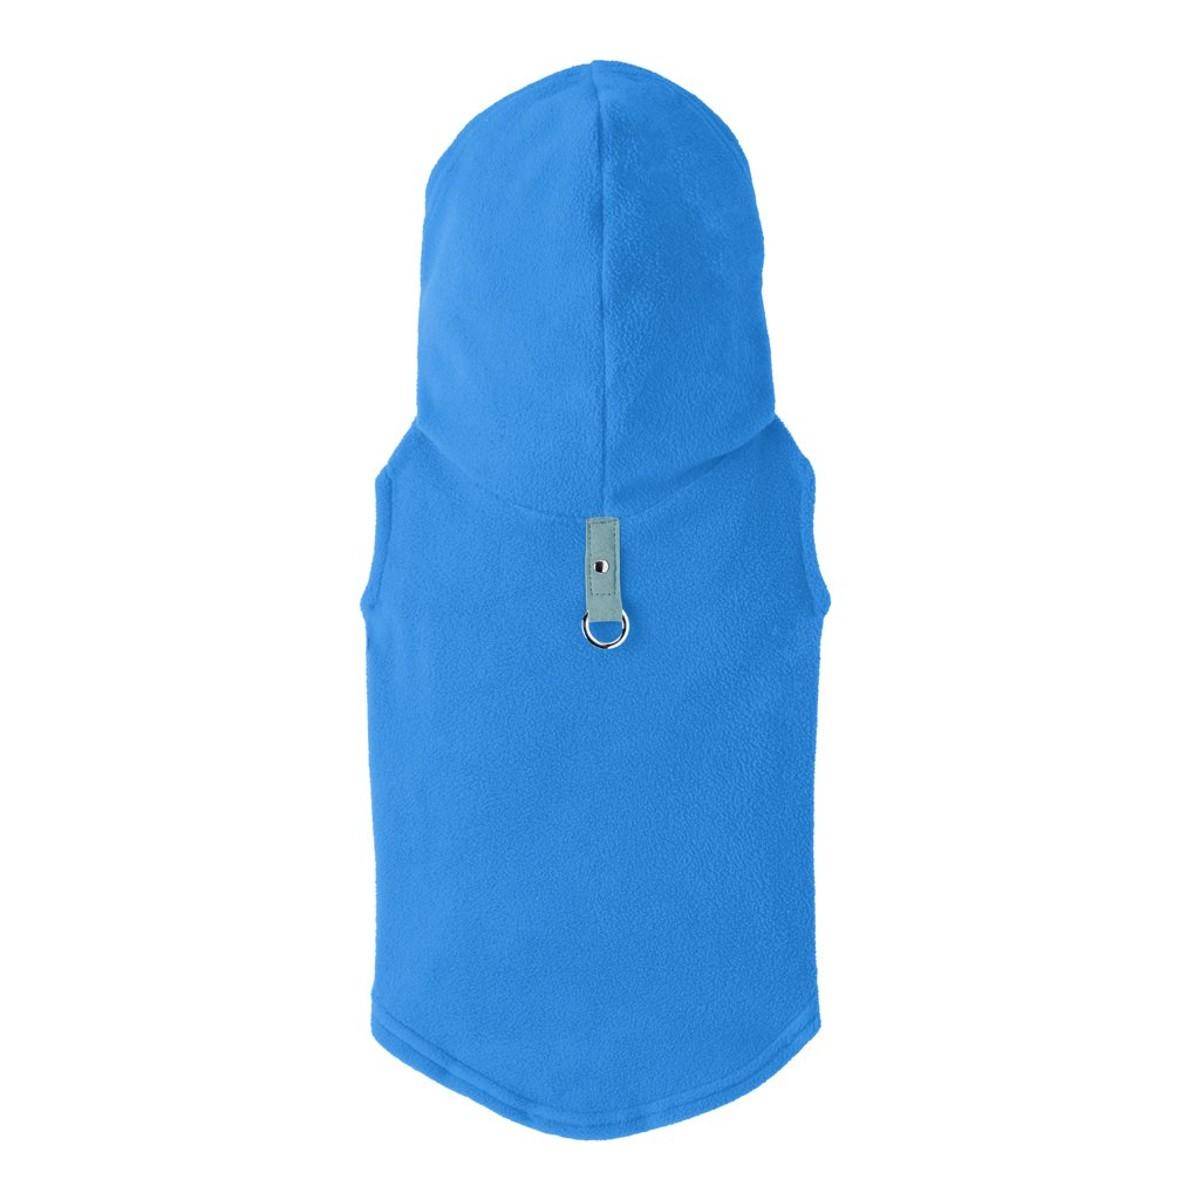 Fleece Vest Hoodie Dog Harness by Gooby - Blue